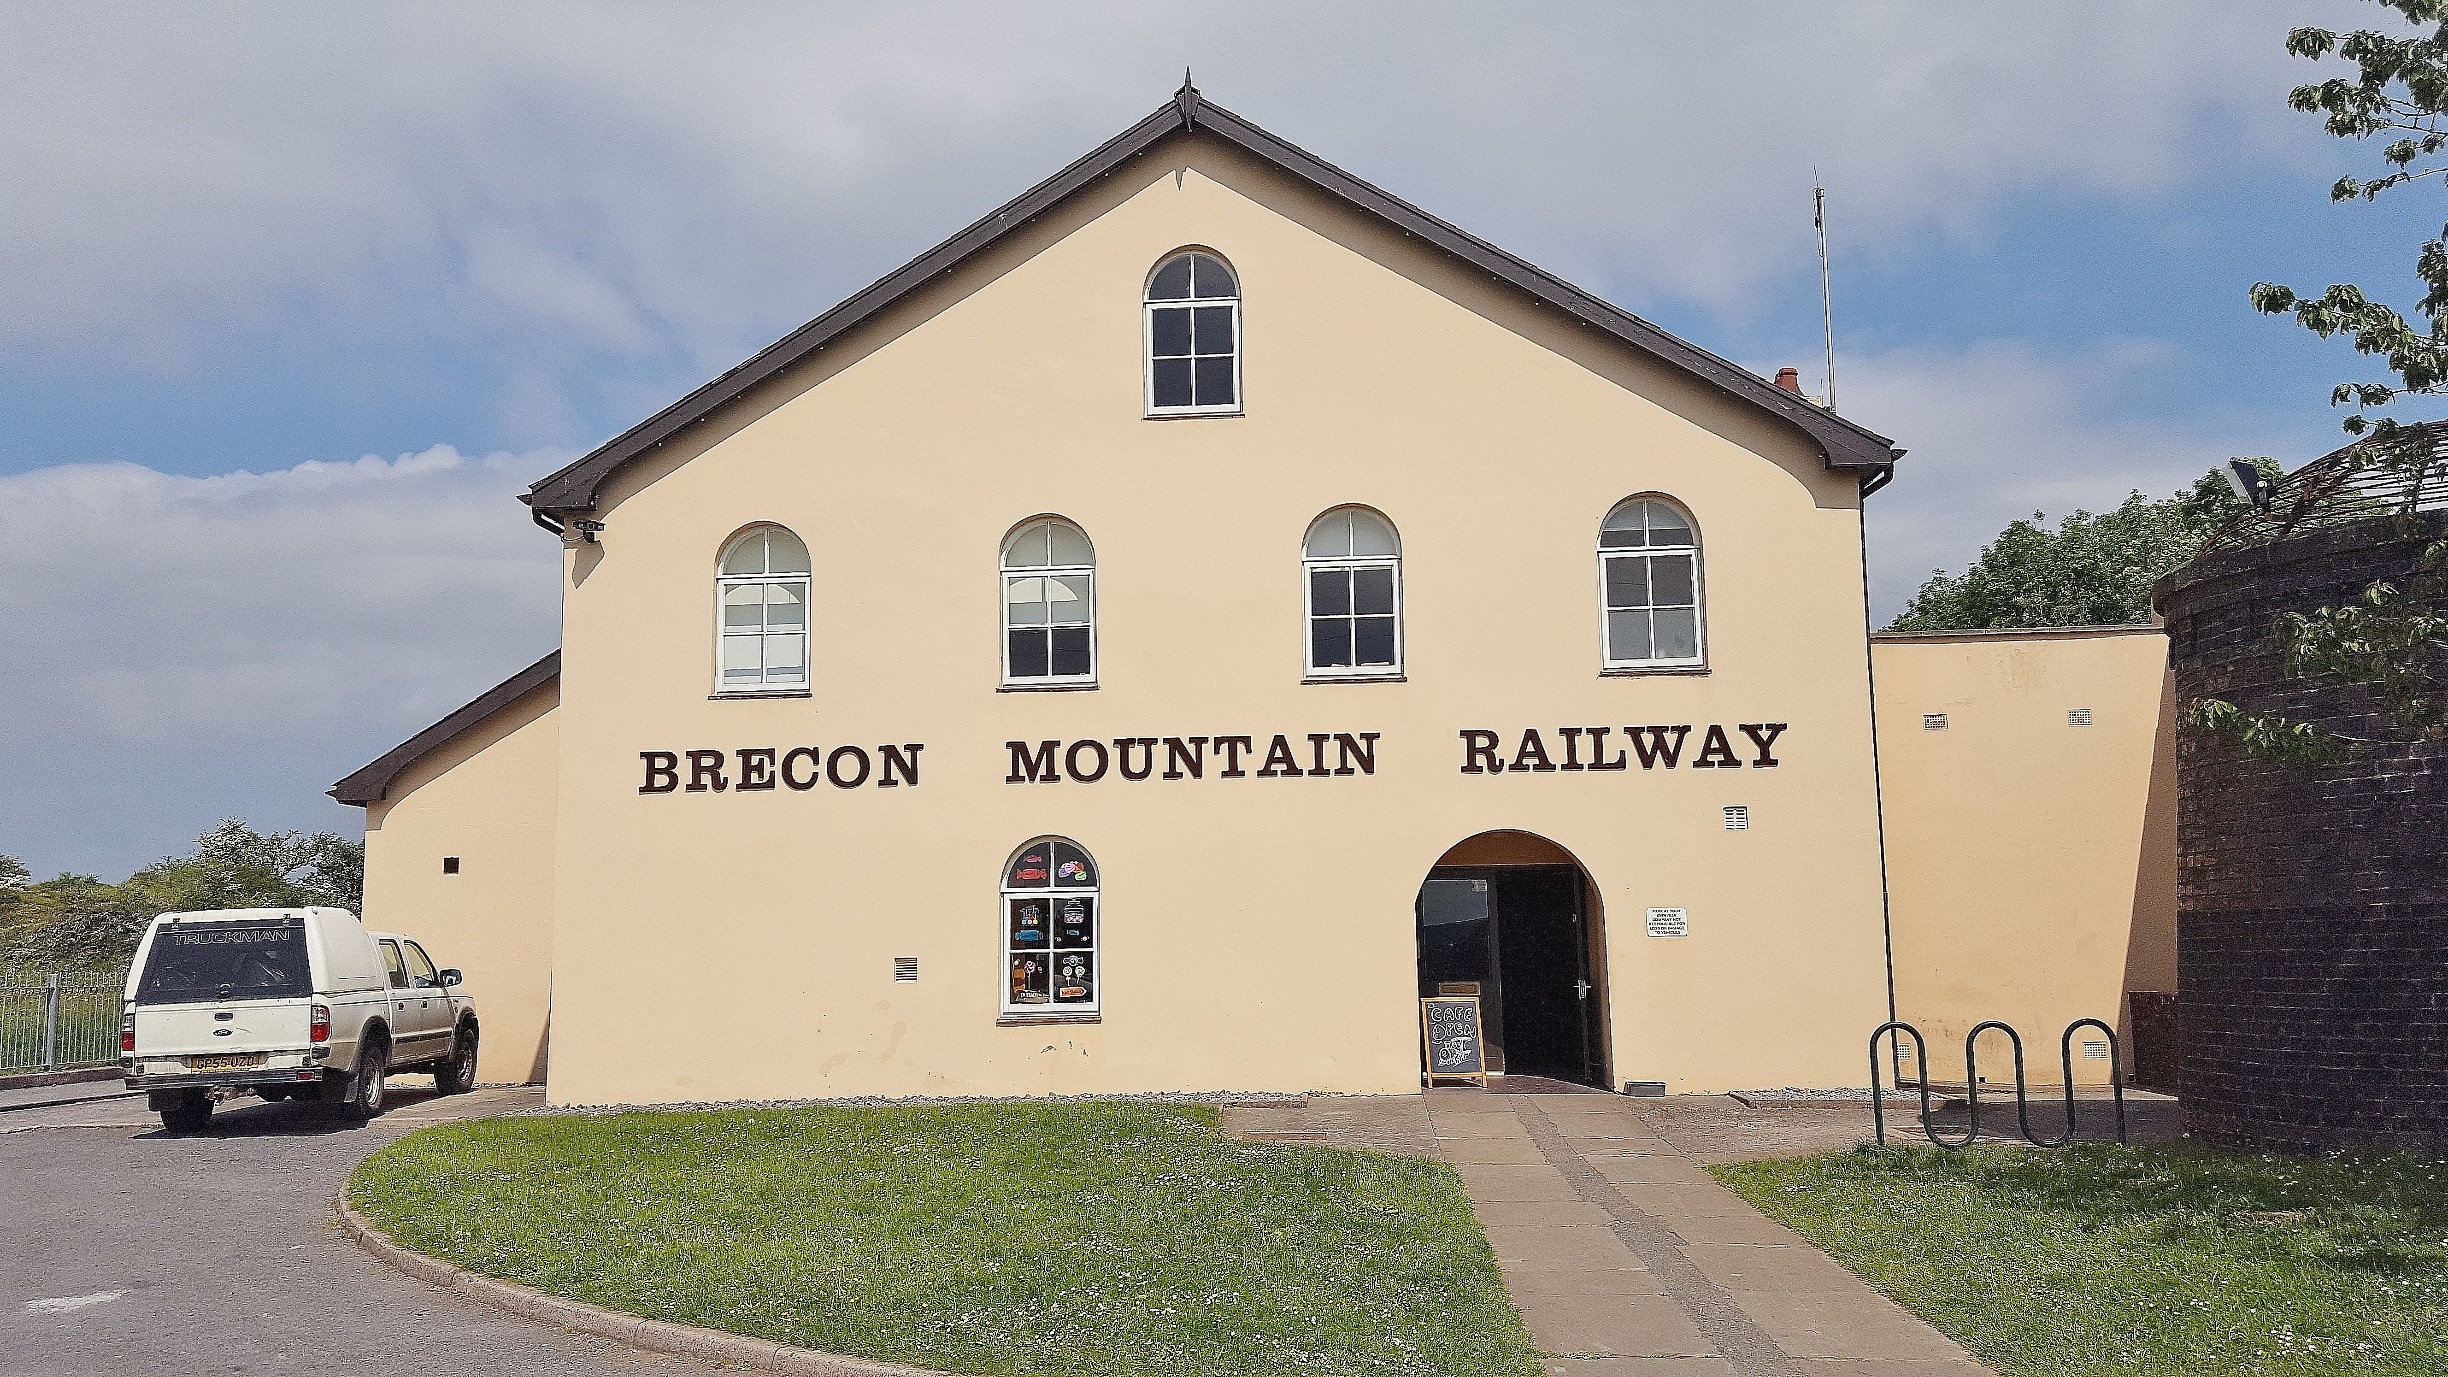 Great Steam Train ride into the Brecon Mountains, 